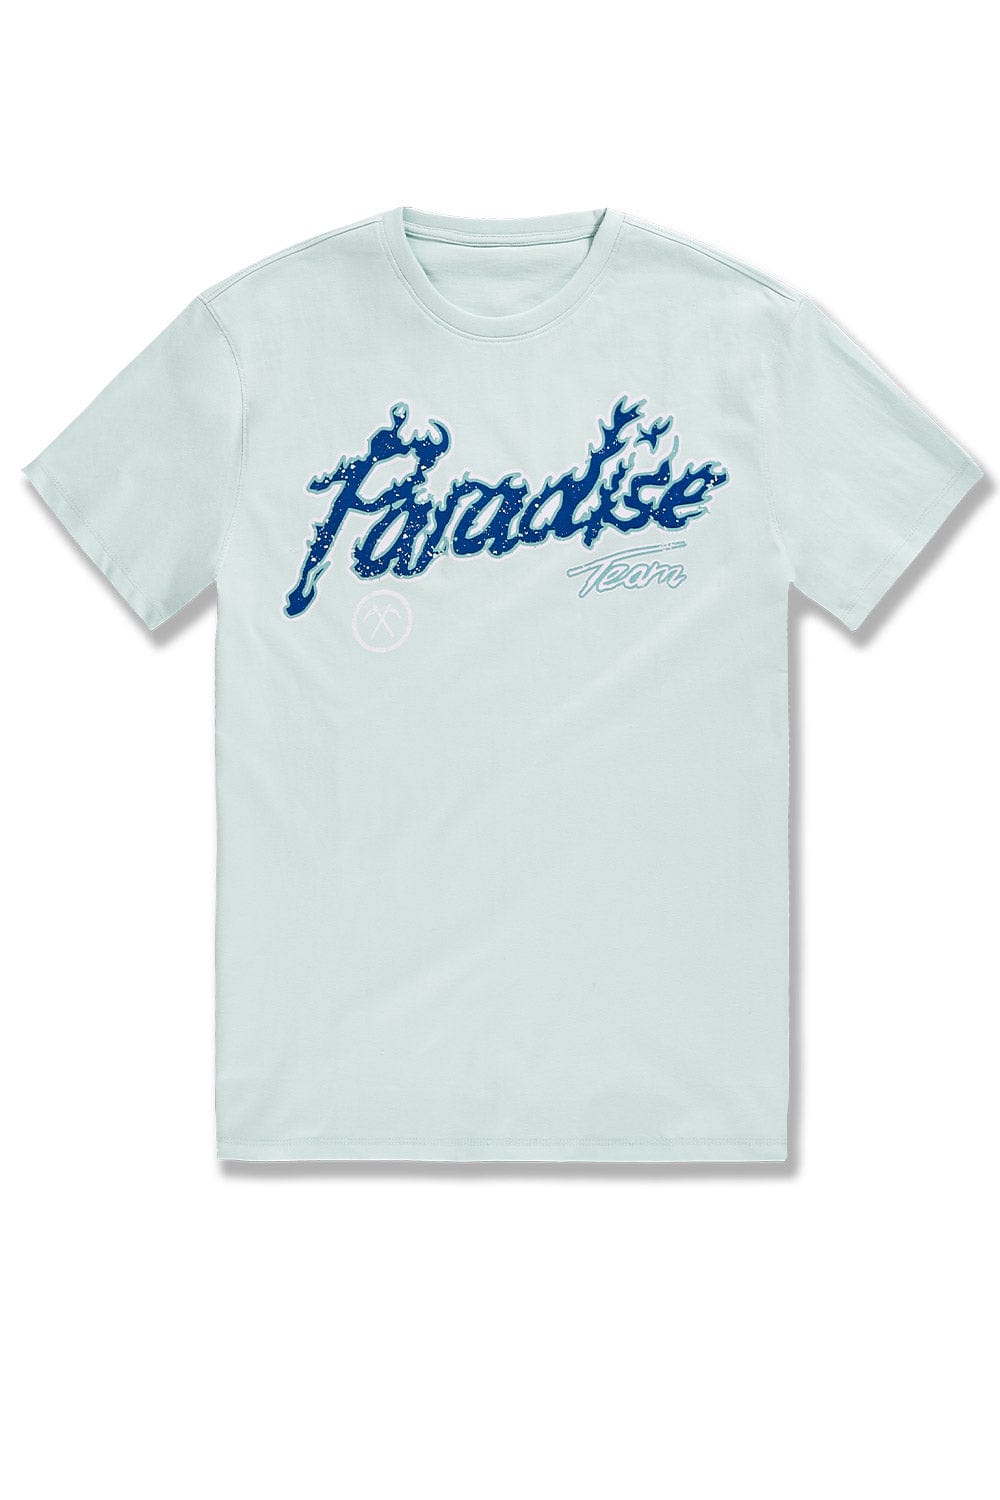 JC Big Men Big Men's Paradise Tour T-Shirt (Powder Blue)